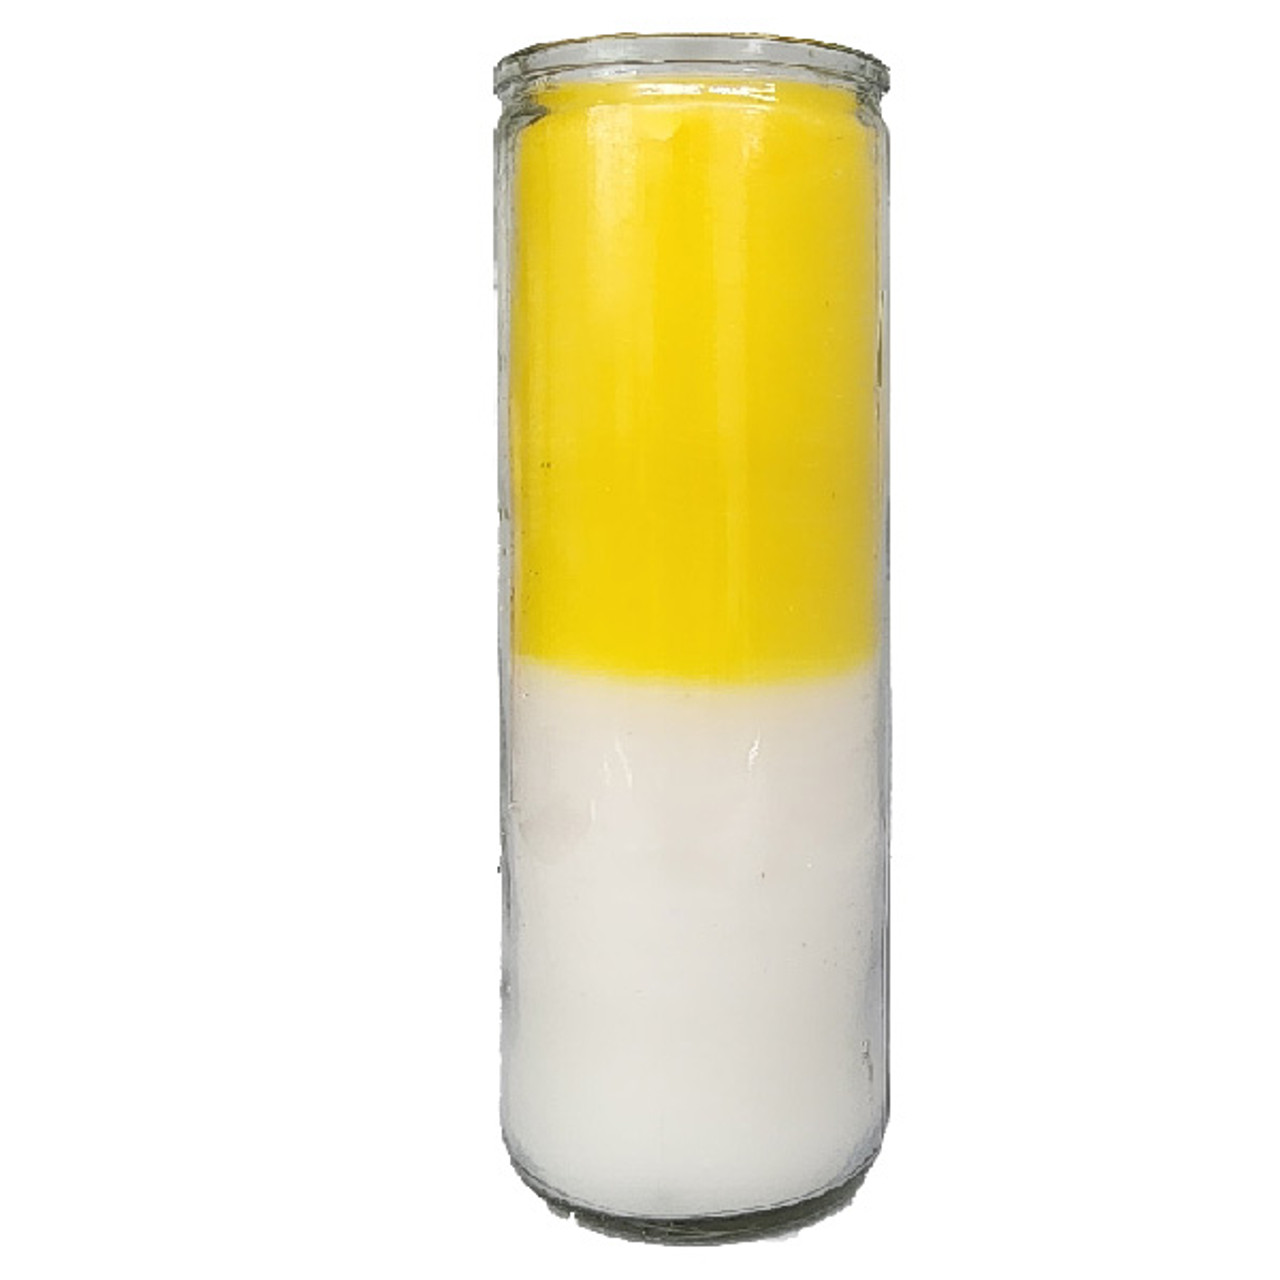 7 Day Plain Candle - Veladora 7 Dias - Blanca Amarilla